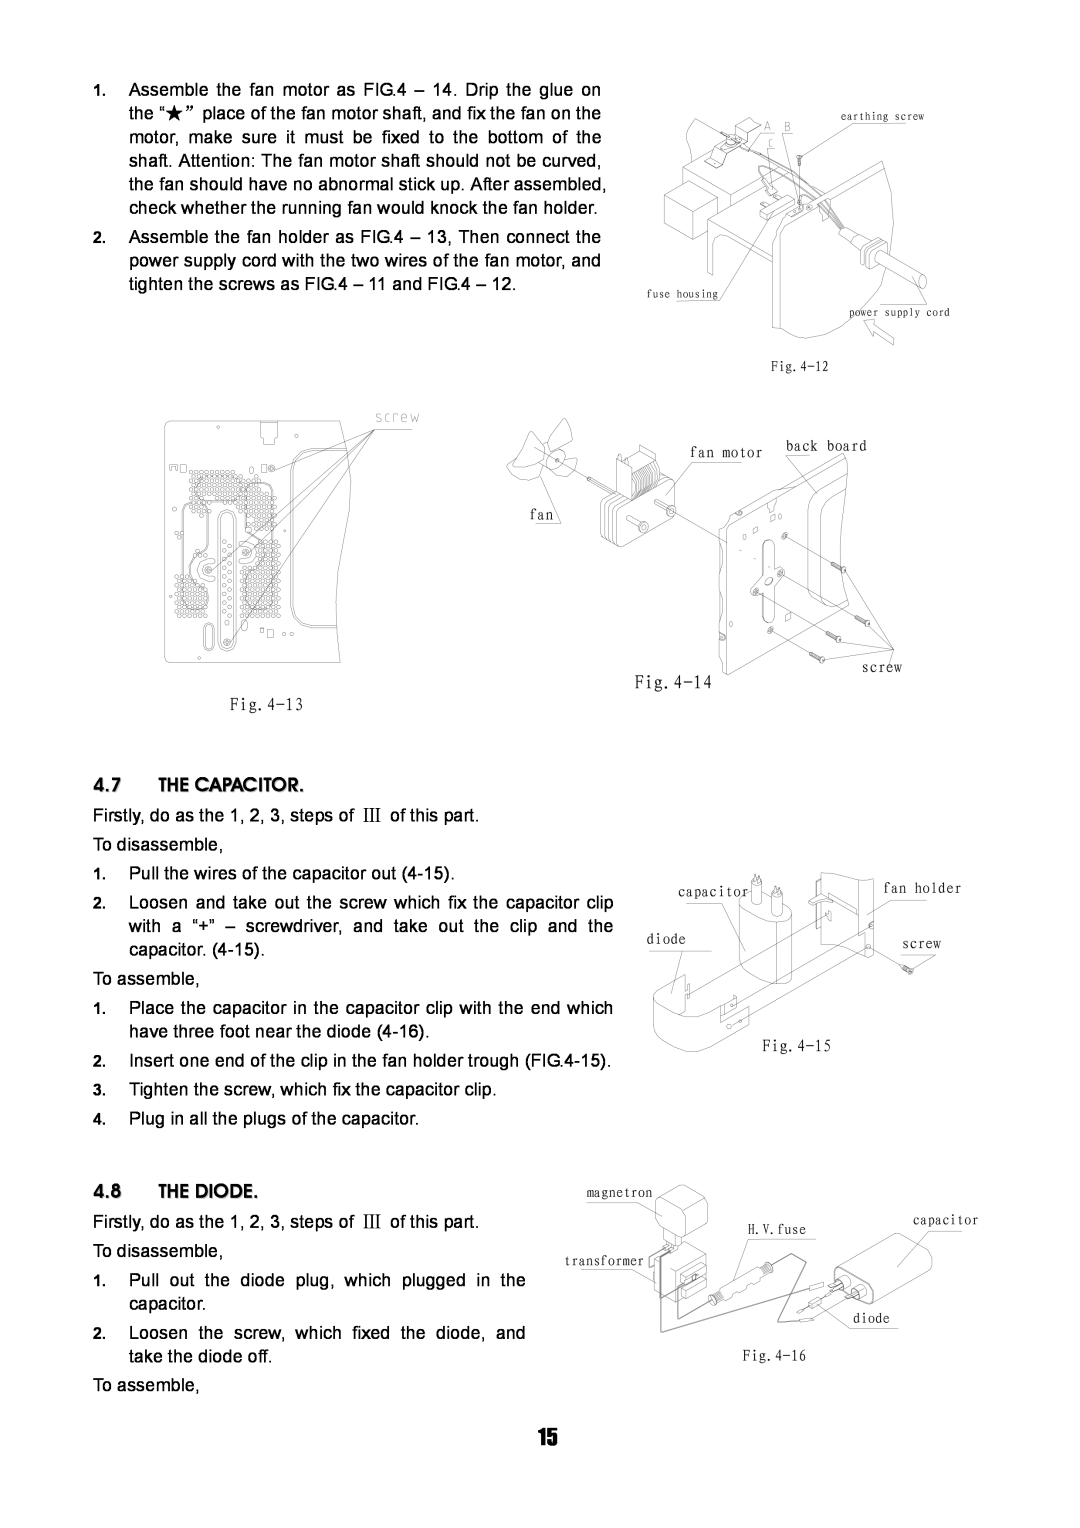 Sanyo SM-GA0005 service manual 4.7THE CAPACITOR, 4.8THE DIODE 